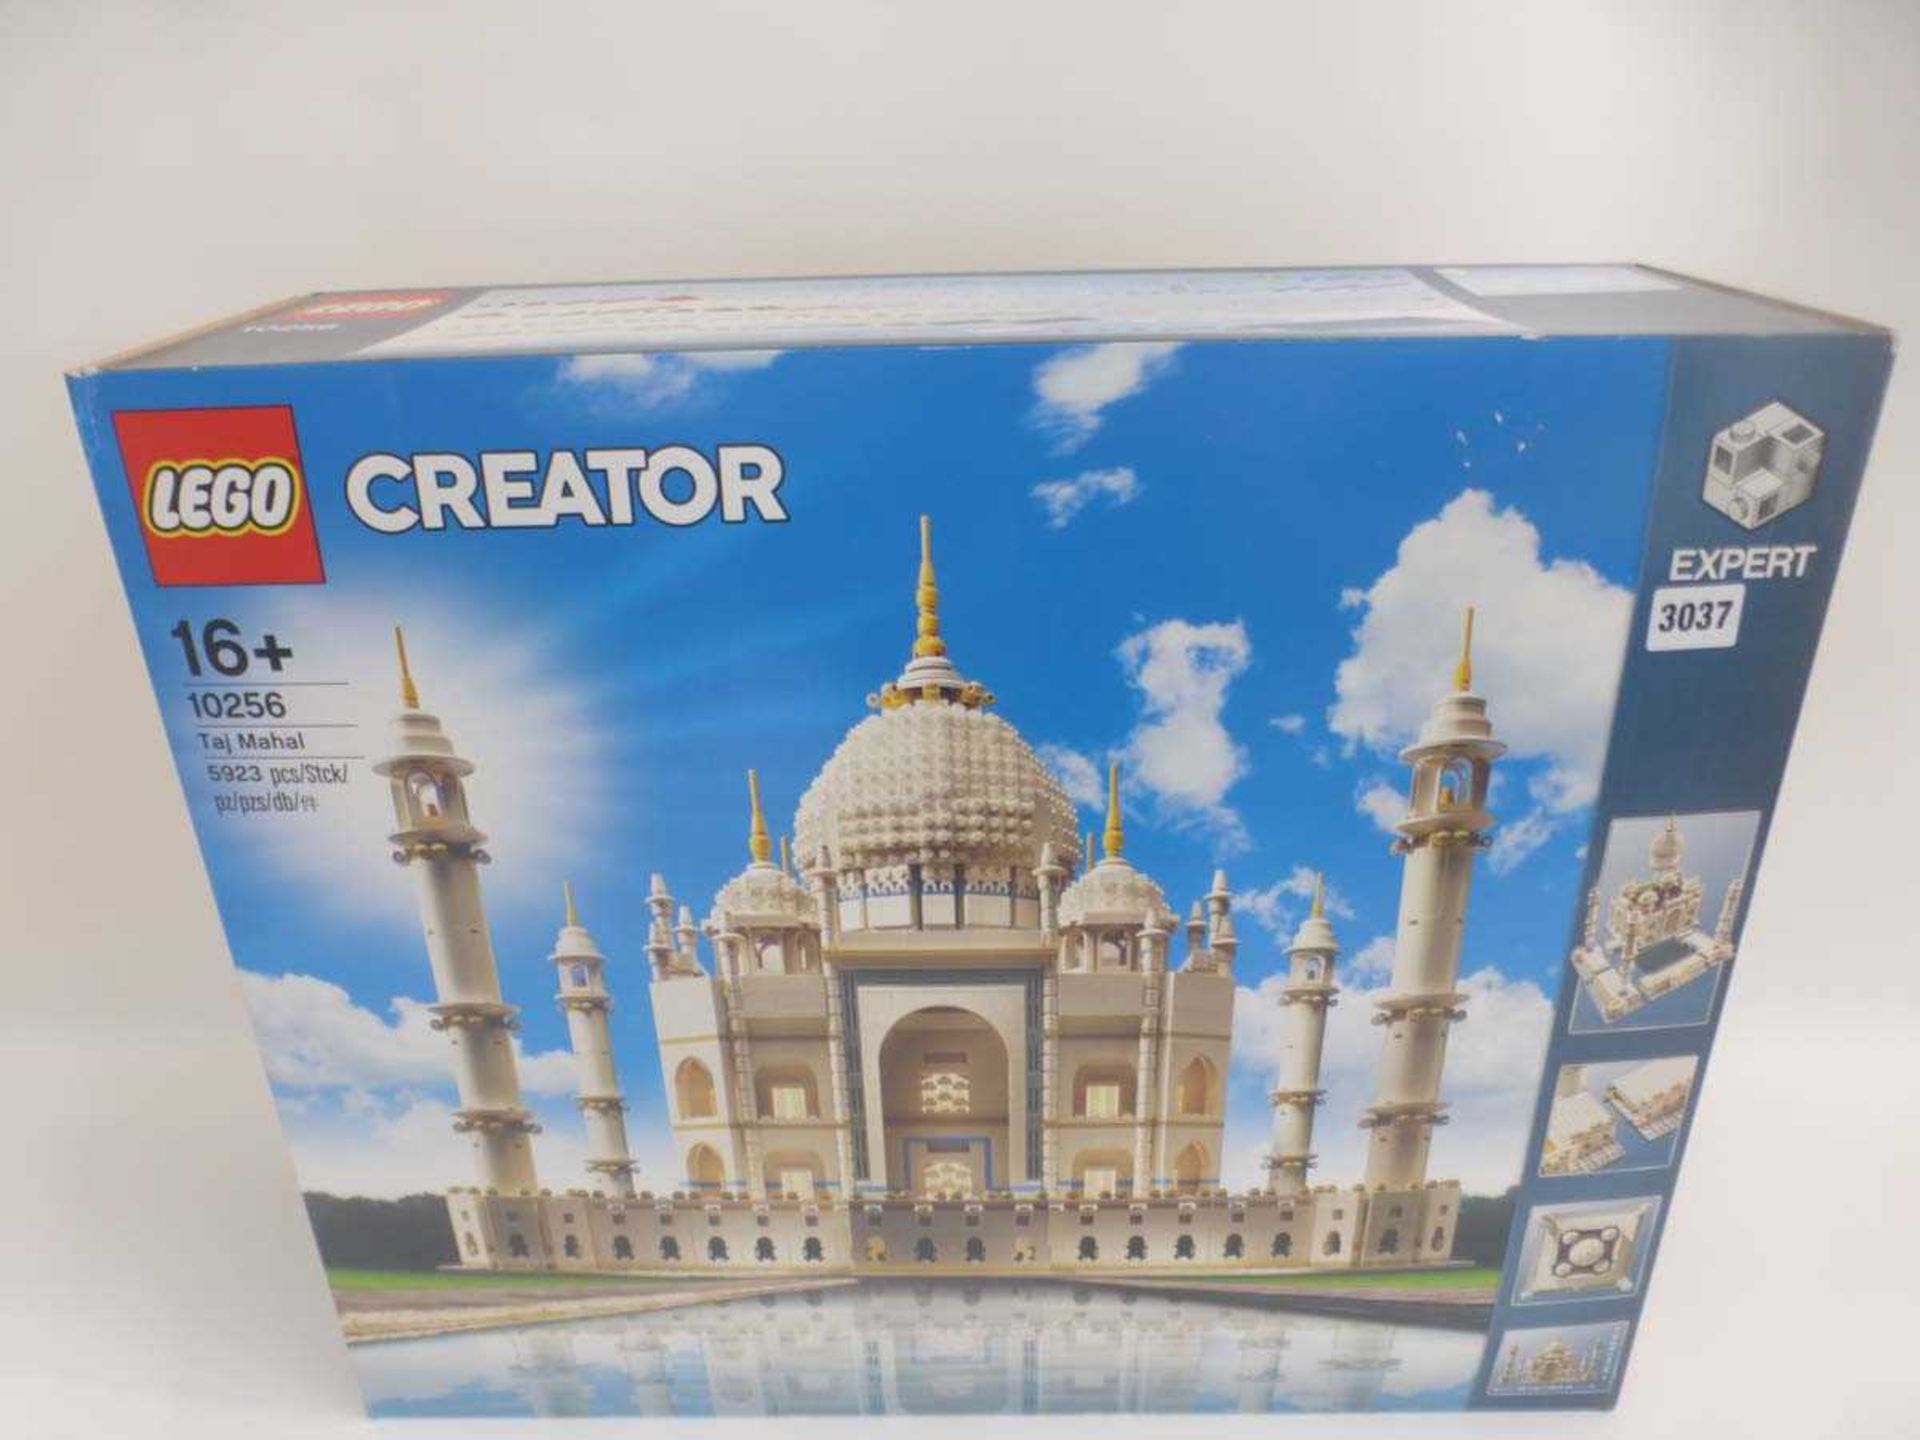 A Lego Creator 10256 Taj Mahal set, boxedContents unchecked